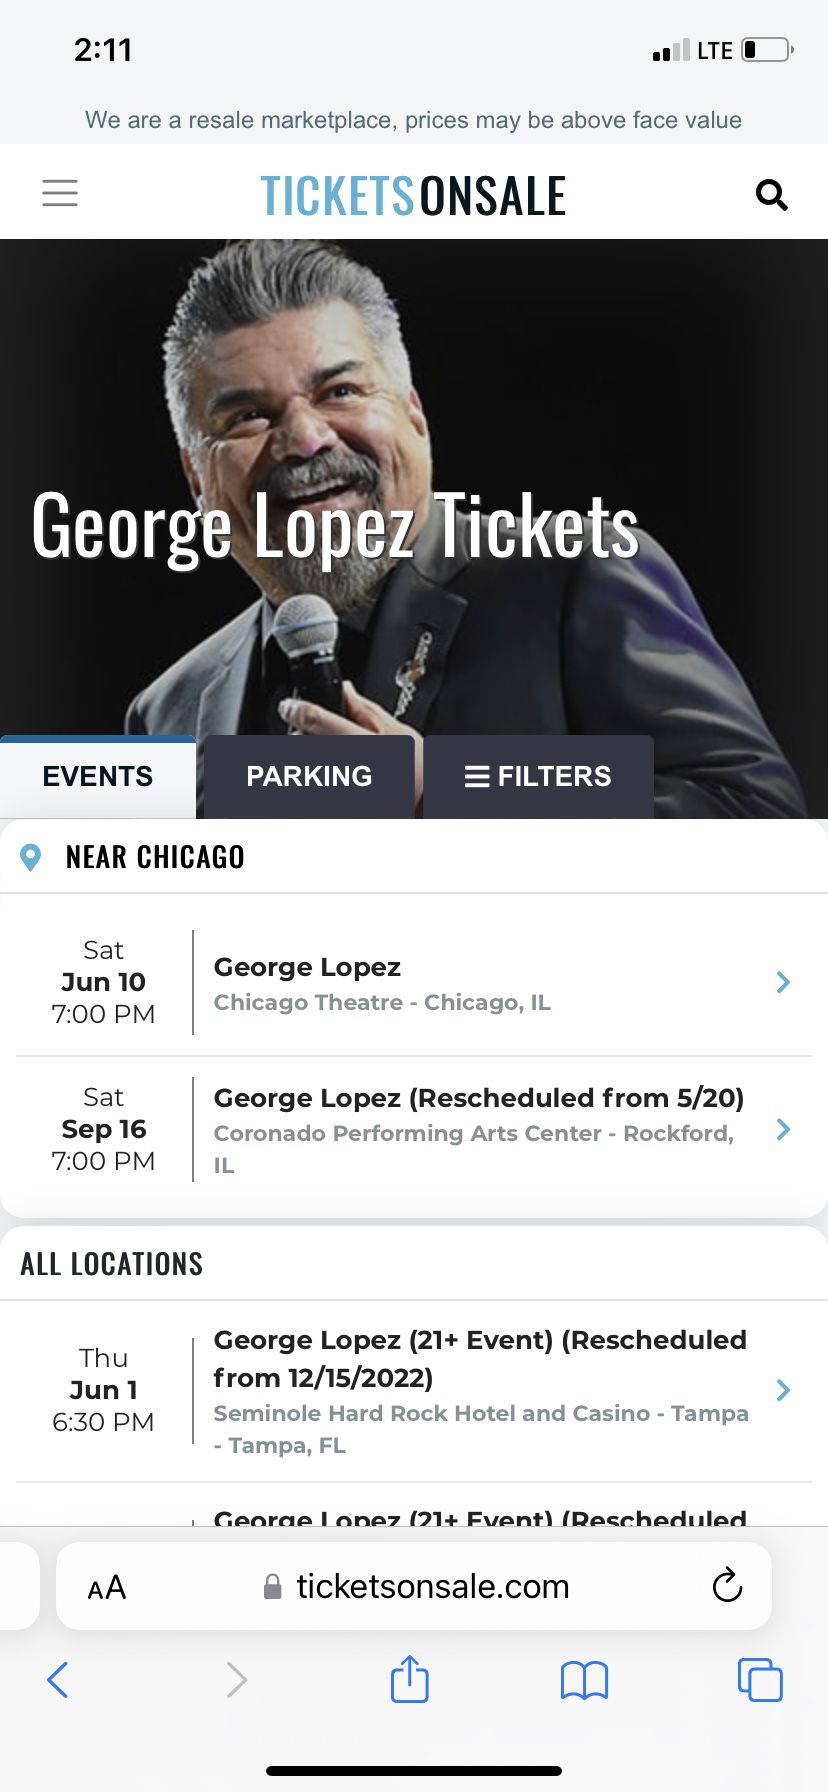 George Lopez Tickets $50